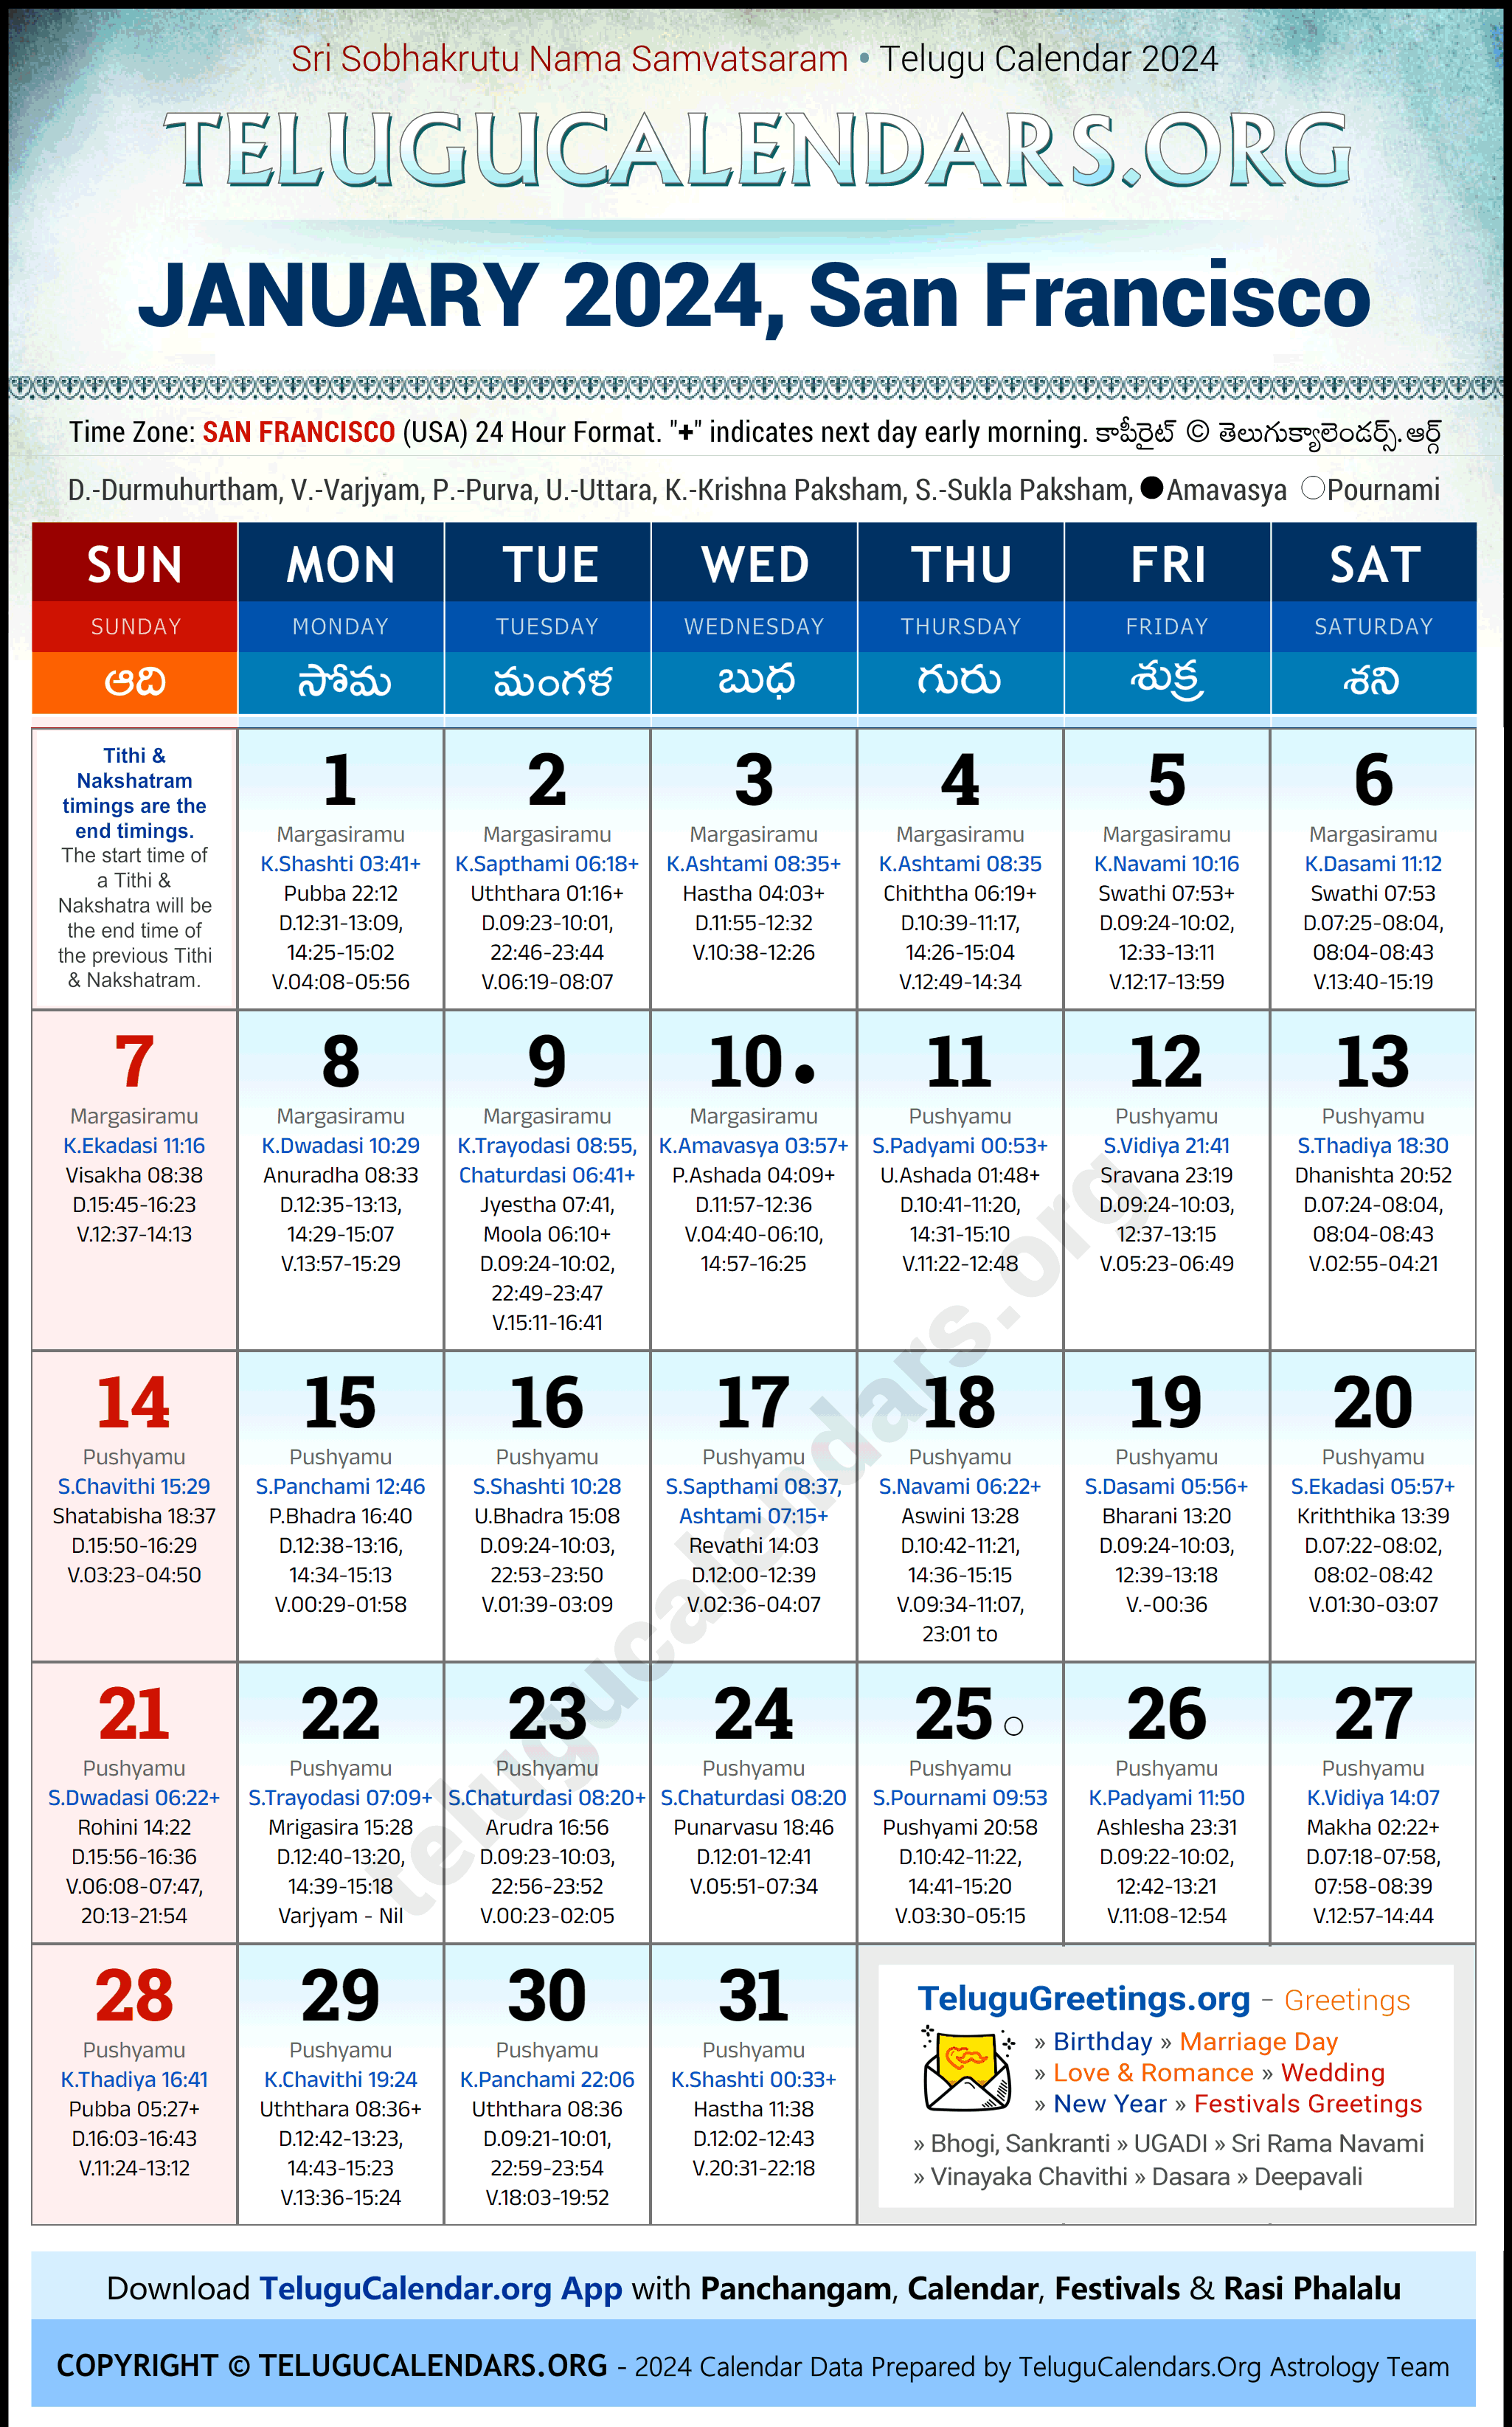 Telugu Calendar 2024 January Festivals for San Francisco